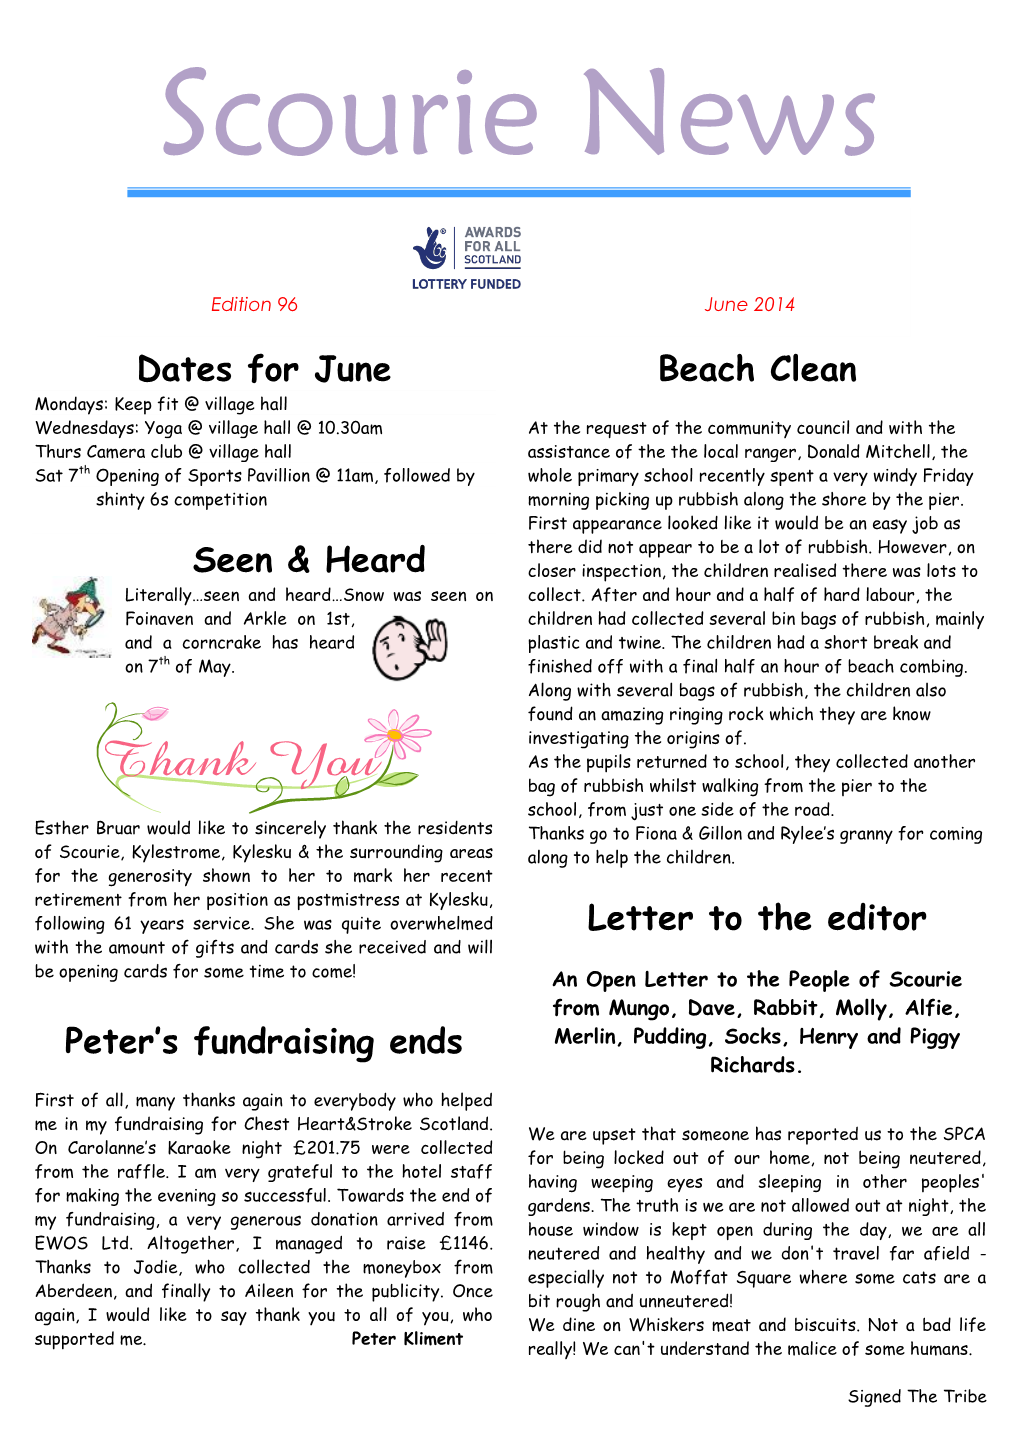 Dates for June Seen & Heard Peter's Fundraising Ends Beach Clean